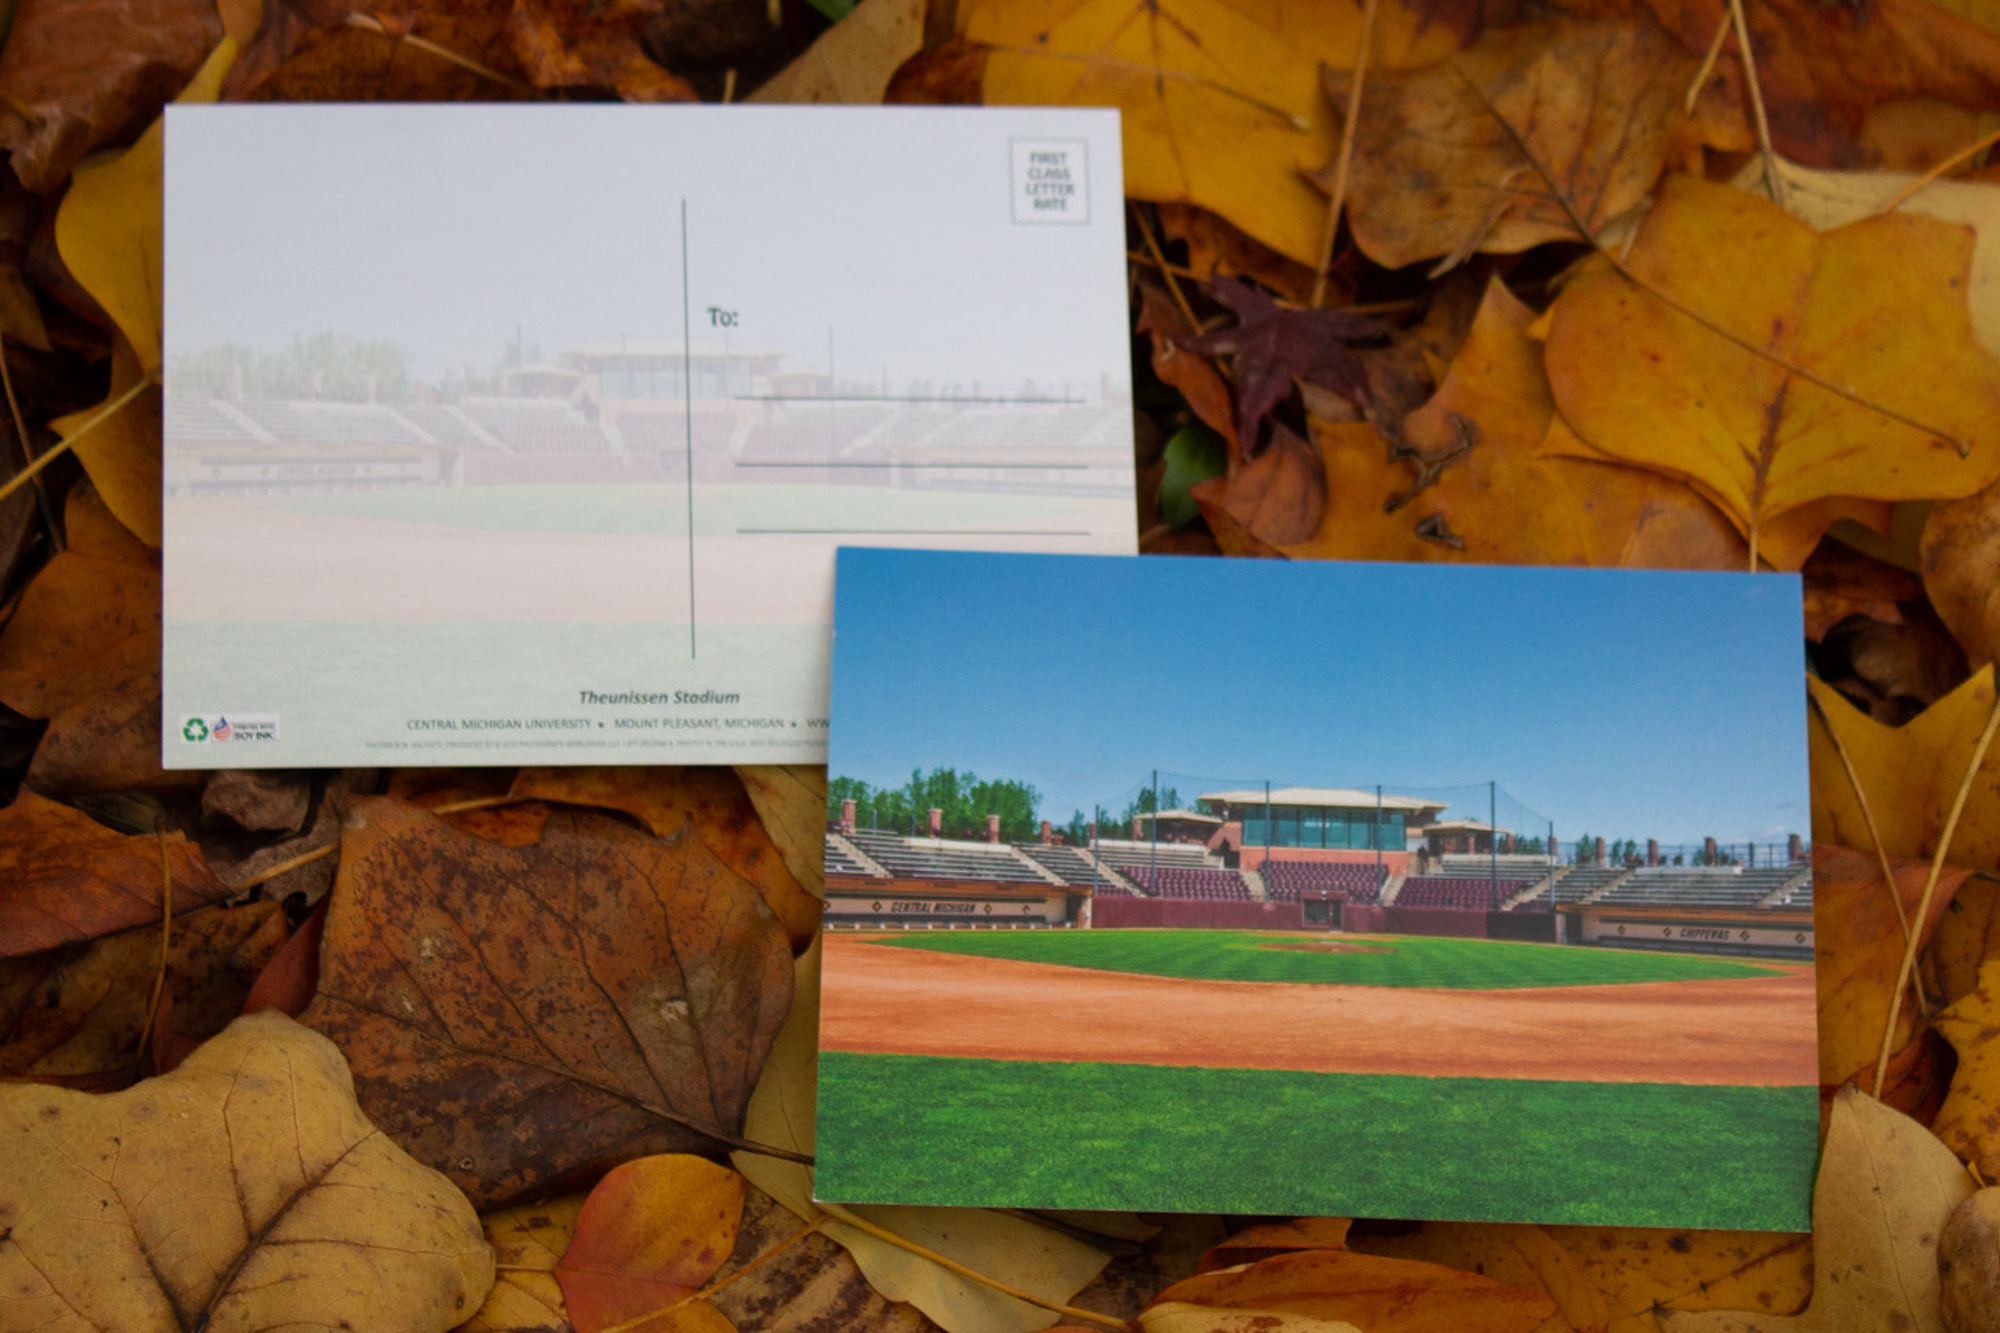 Central Michigan University Theunissen Stadium Postcard (SKU 1212213498)